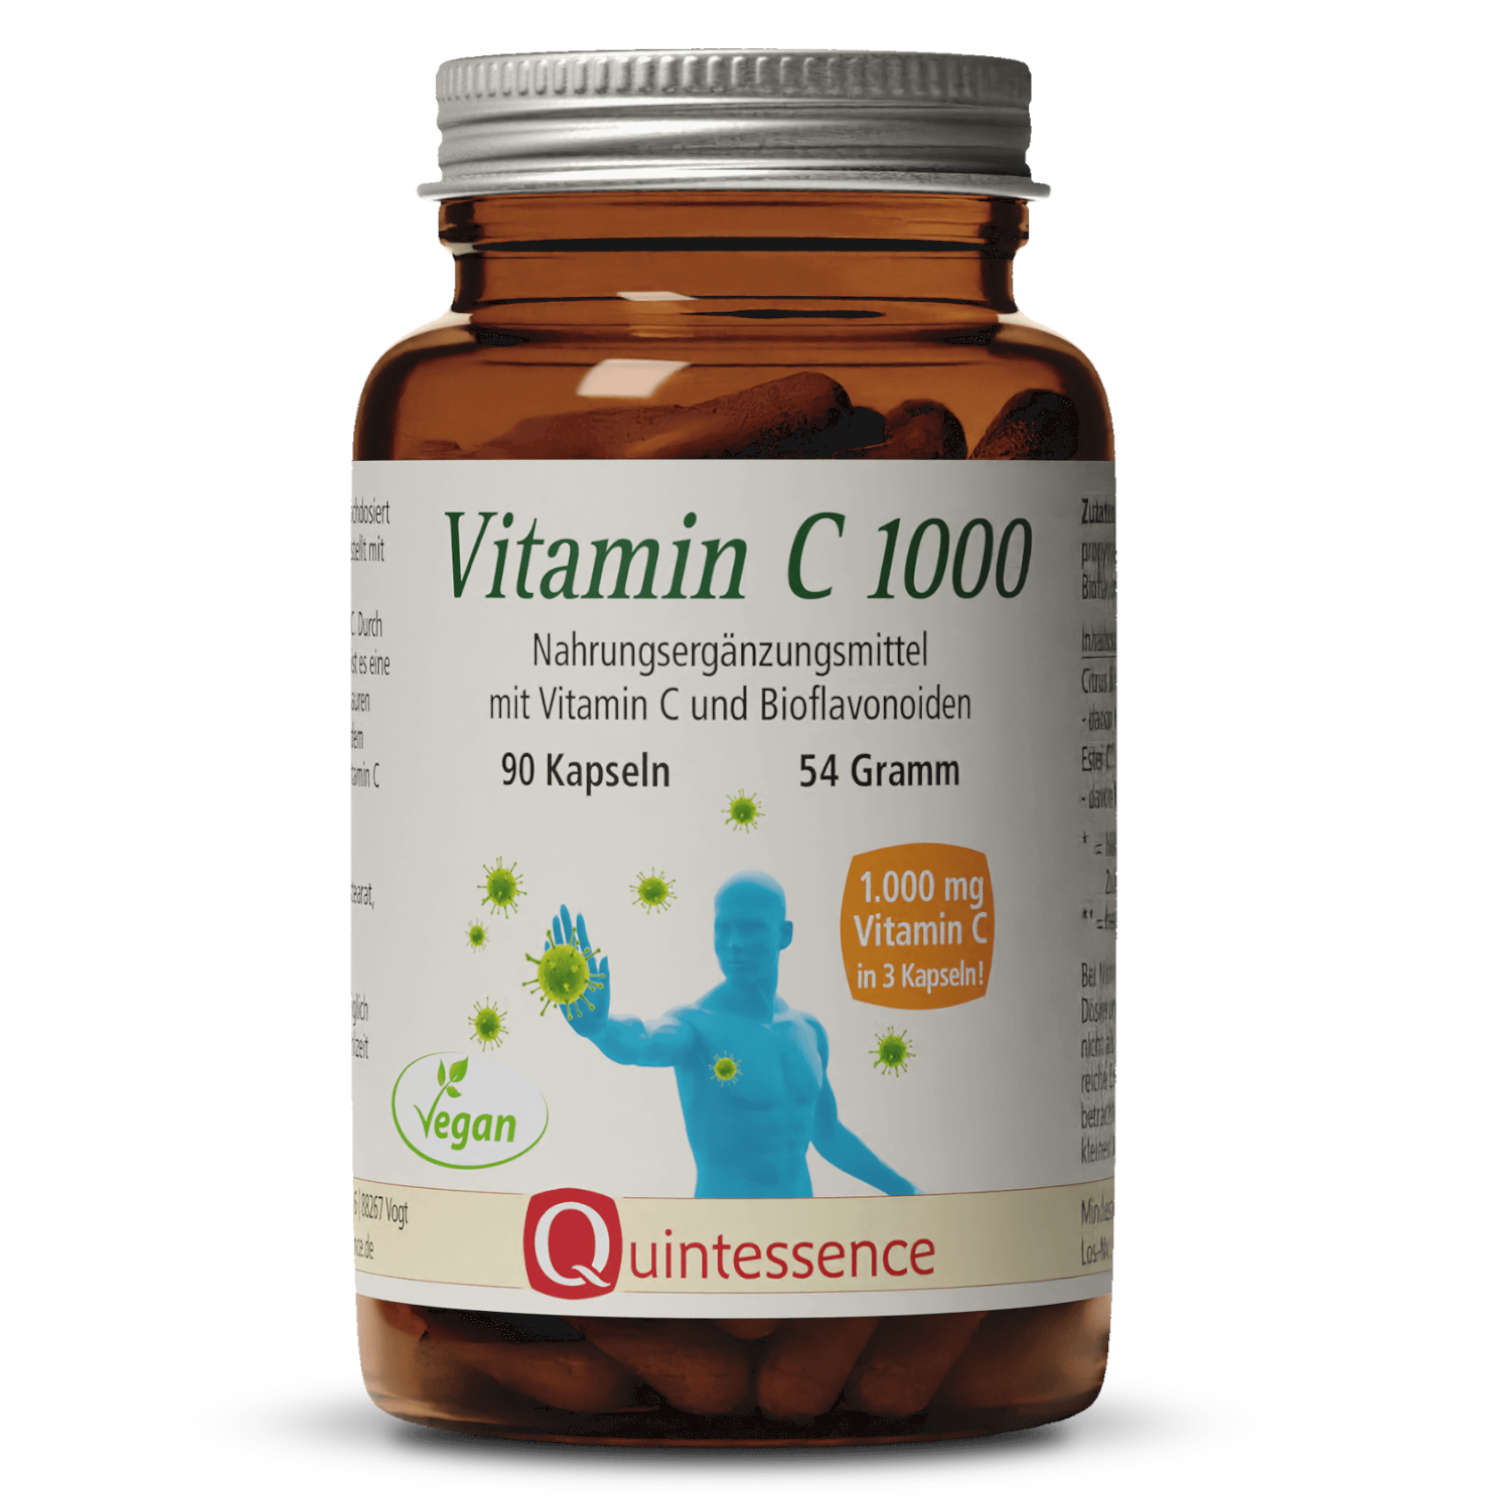 Vitamin C 1000 von Quintessence Naturprodukte - 90 Kapseln